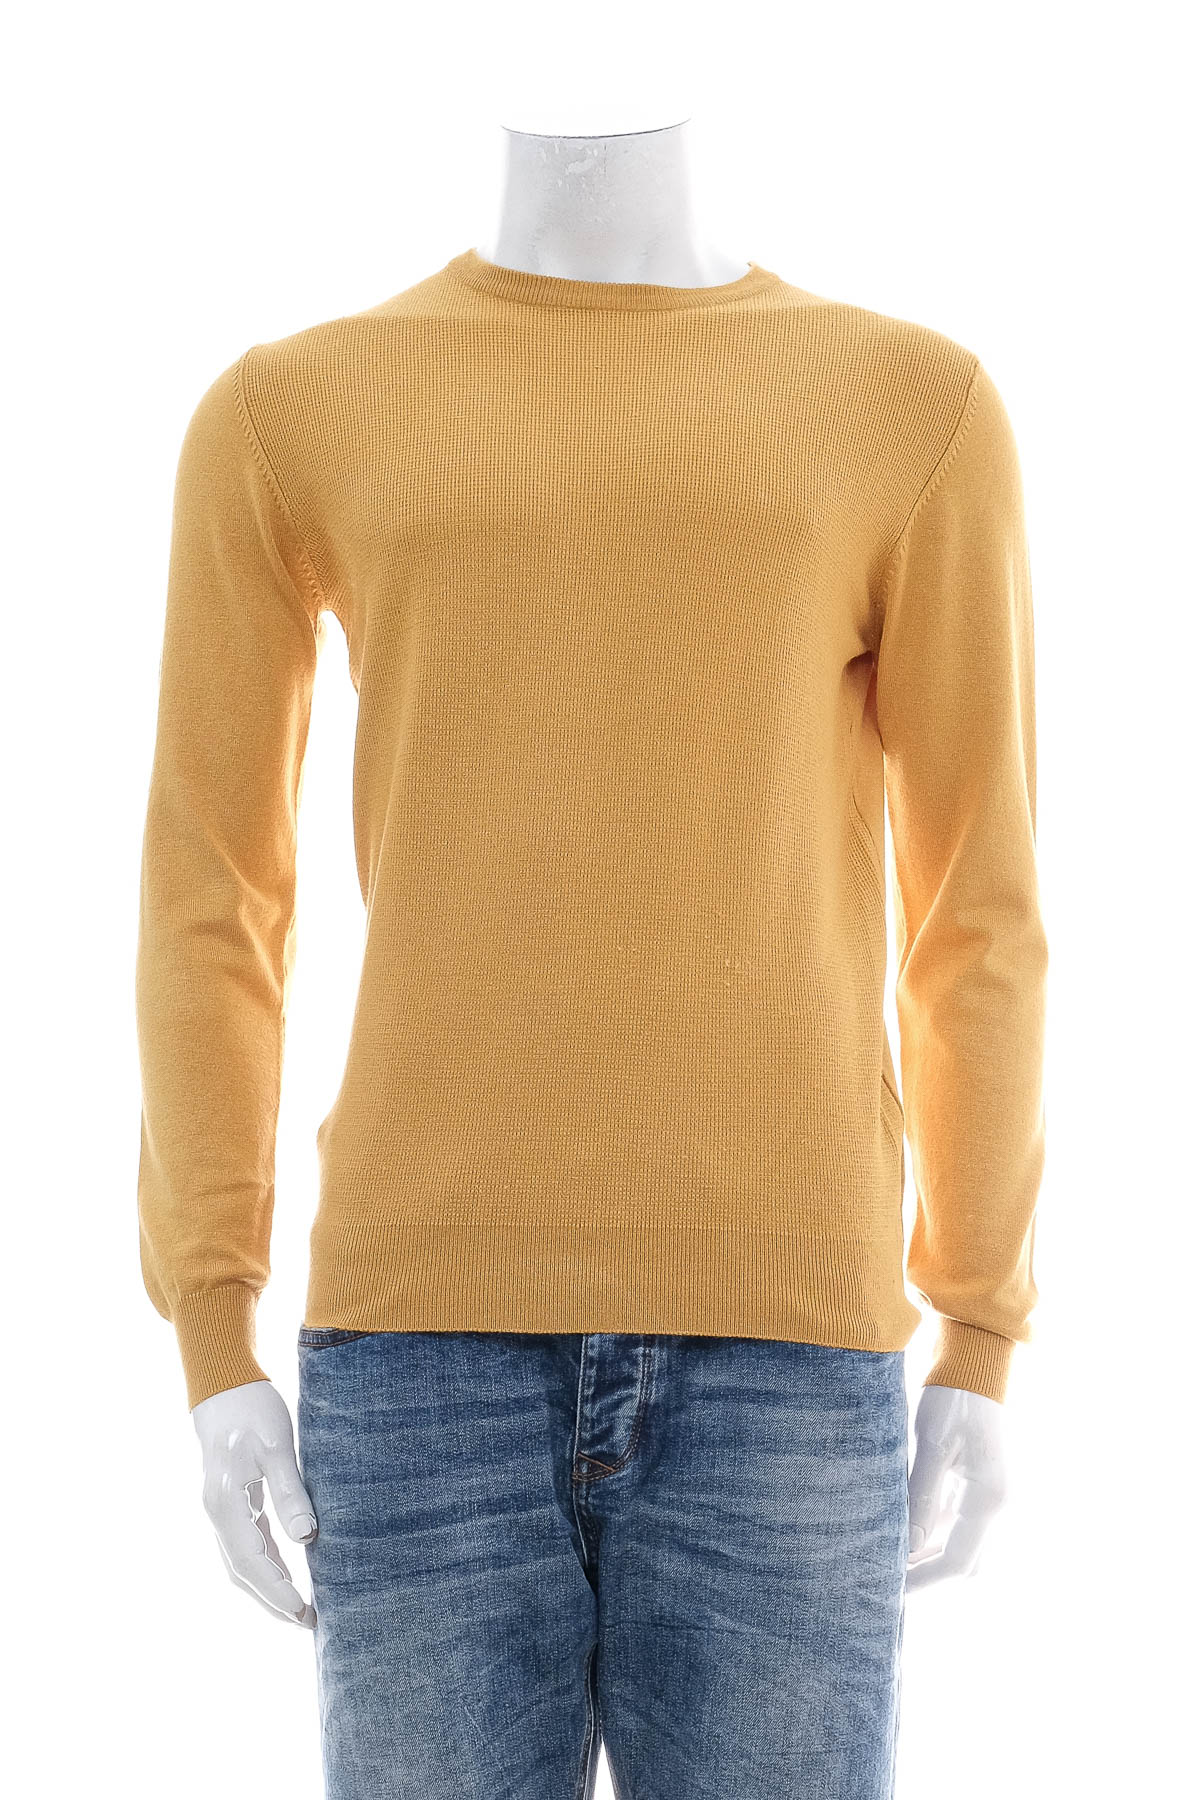 Men's sweater - Cotton & Silk - 0